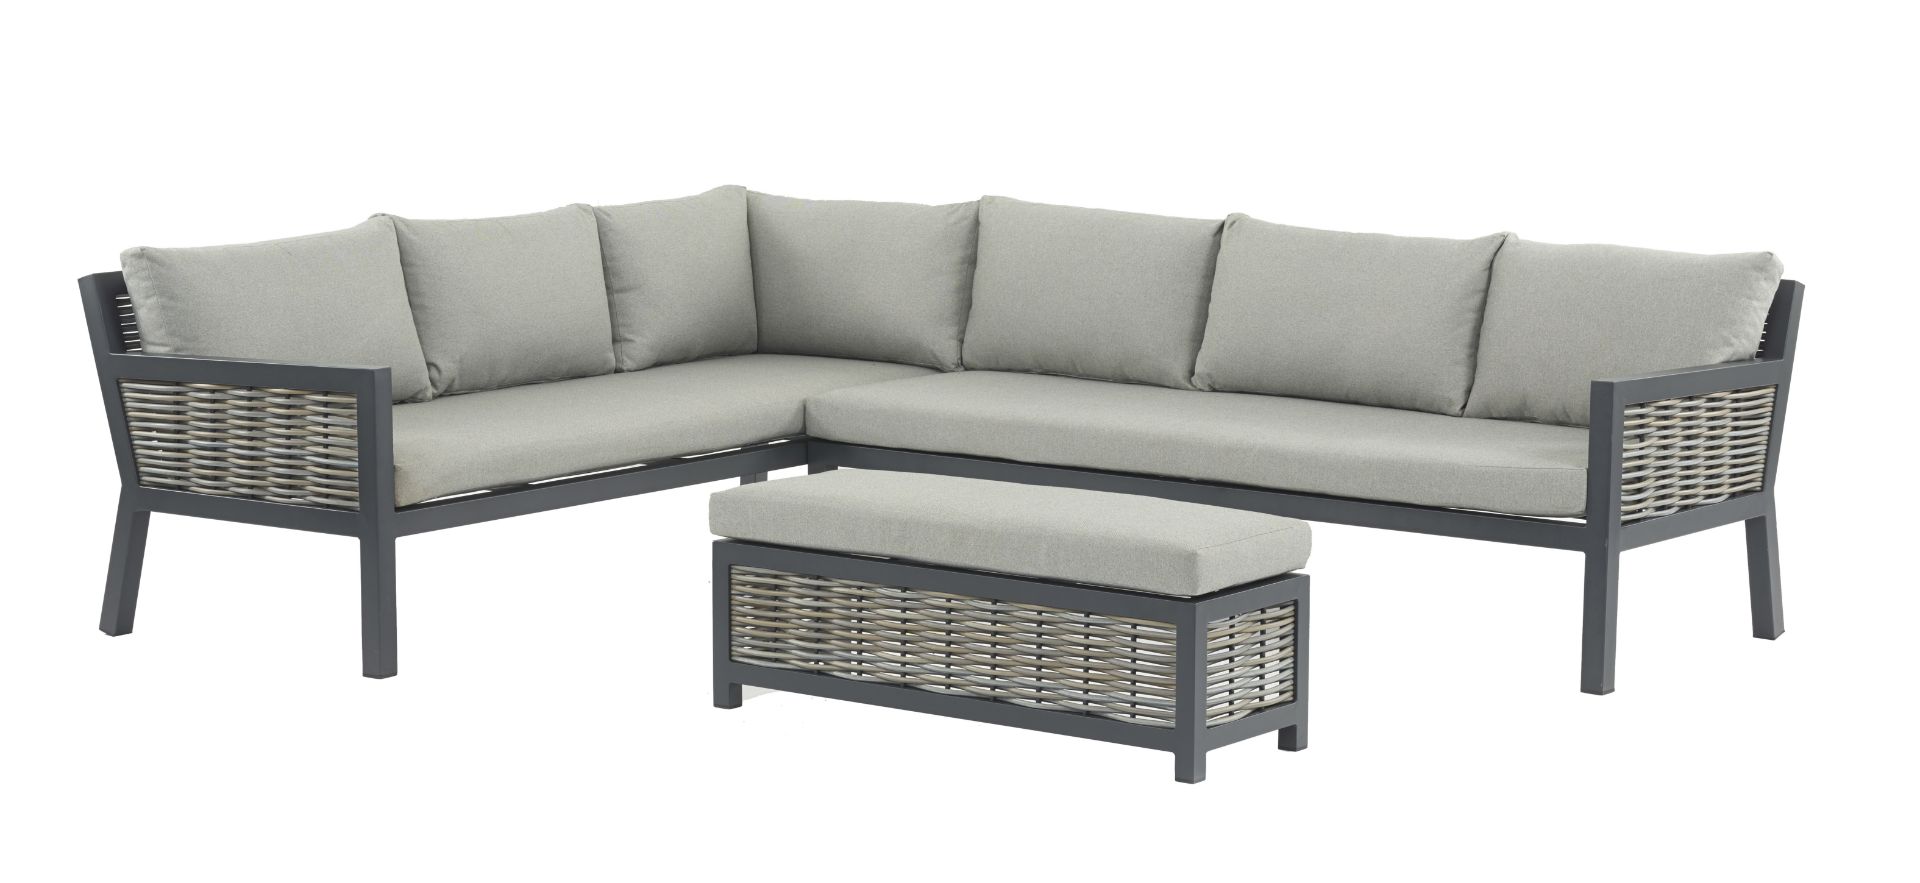 Set A395 Portofino Wicker Rectangle Modular Sofa & Bench - Long Right